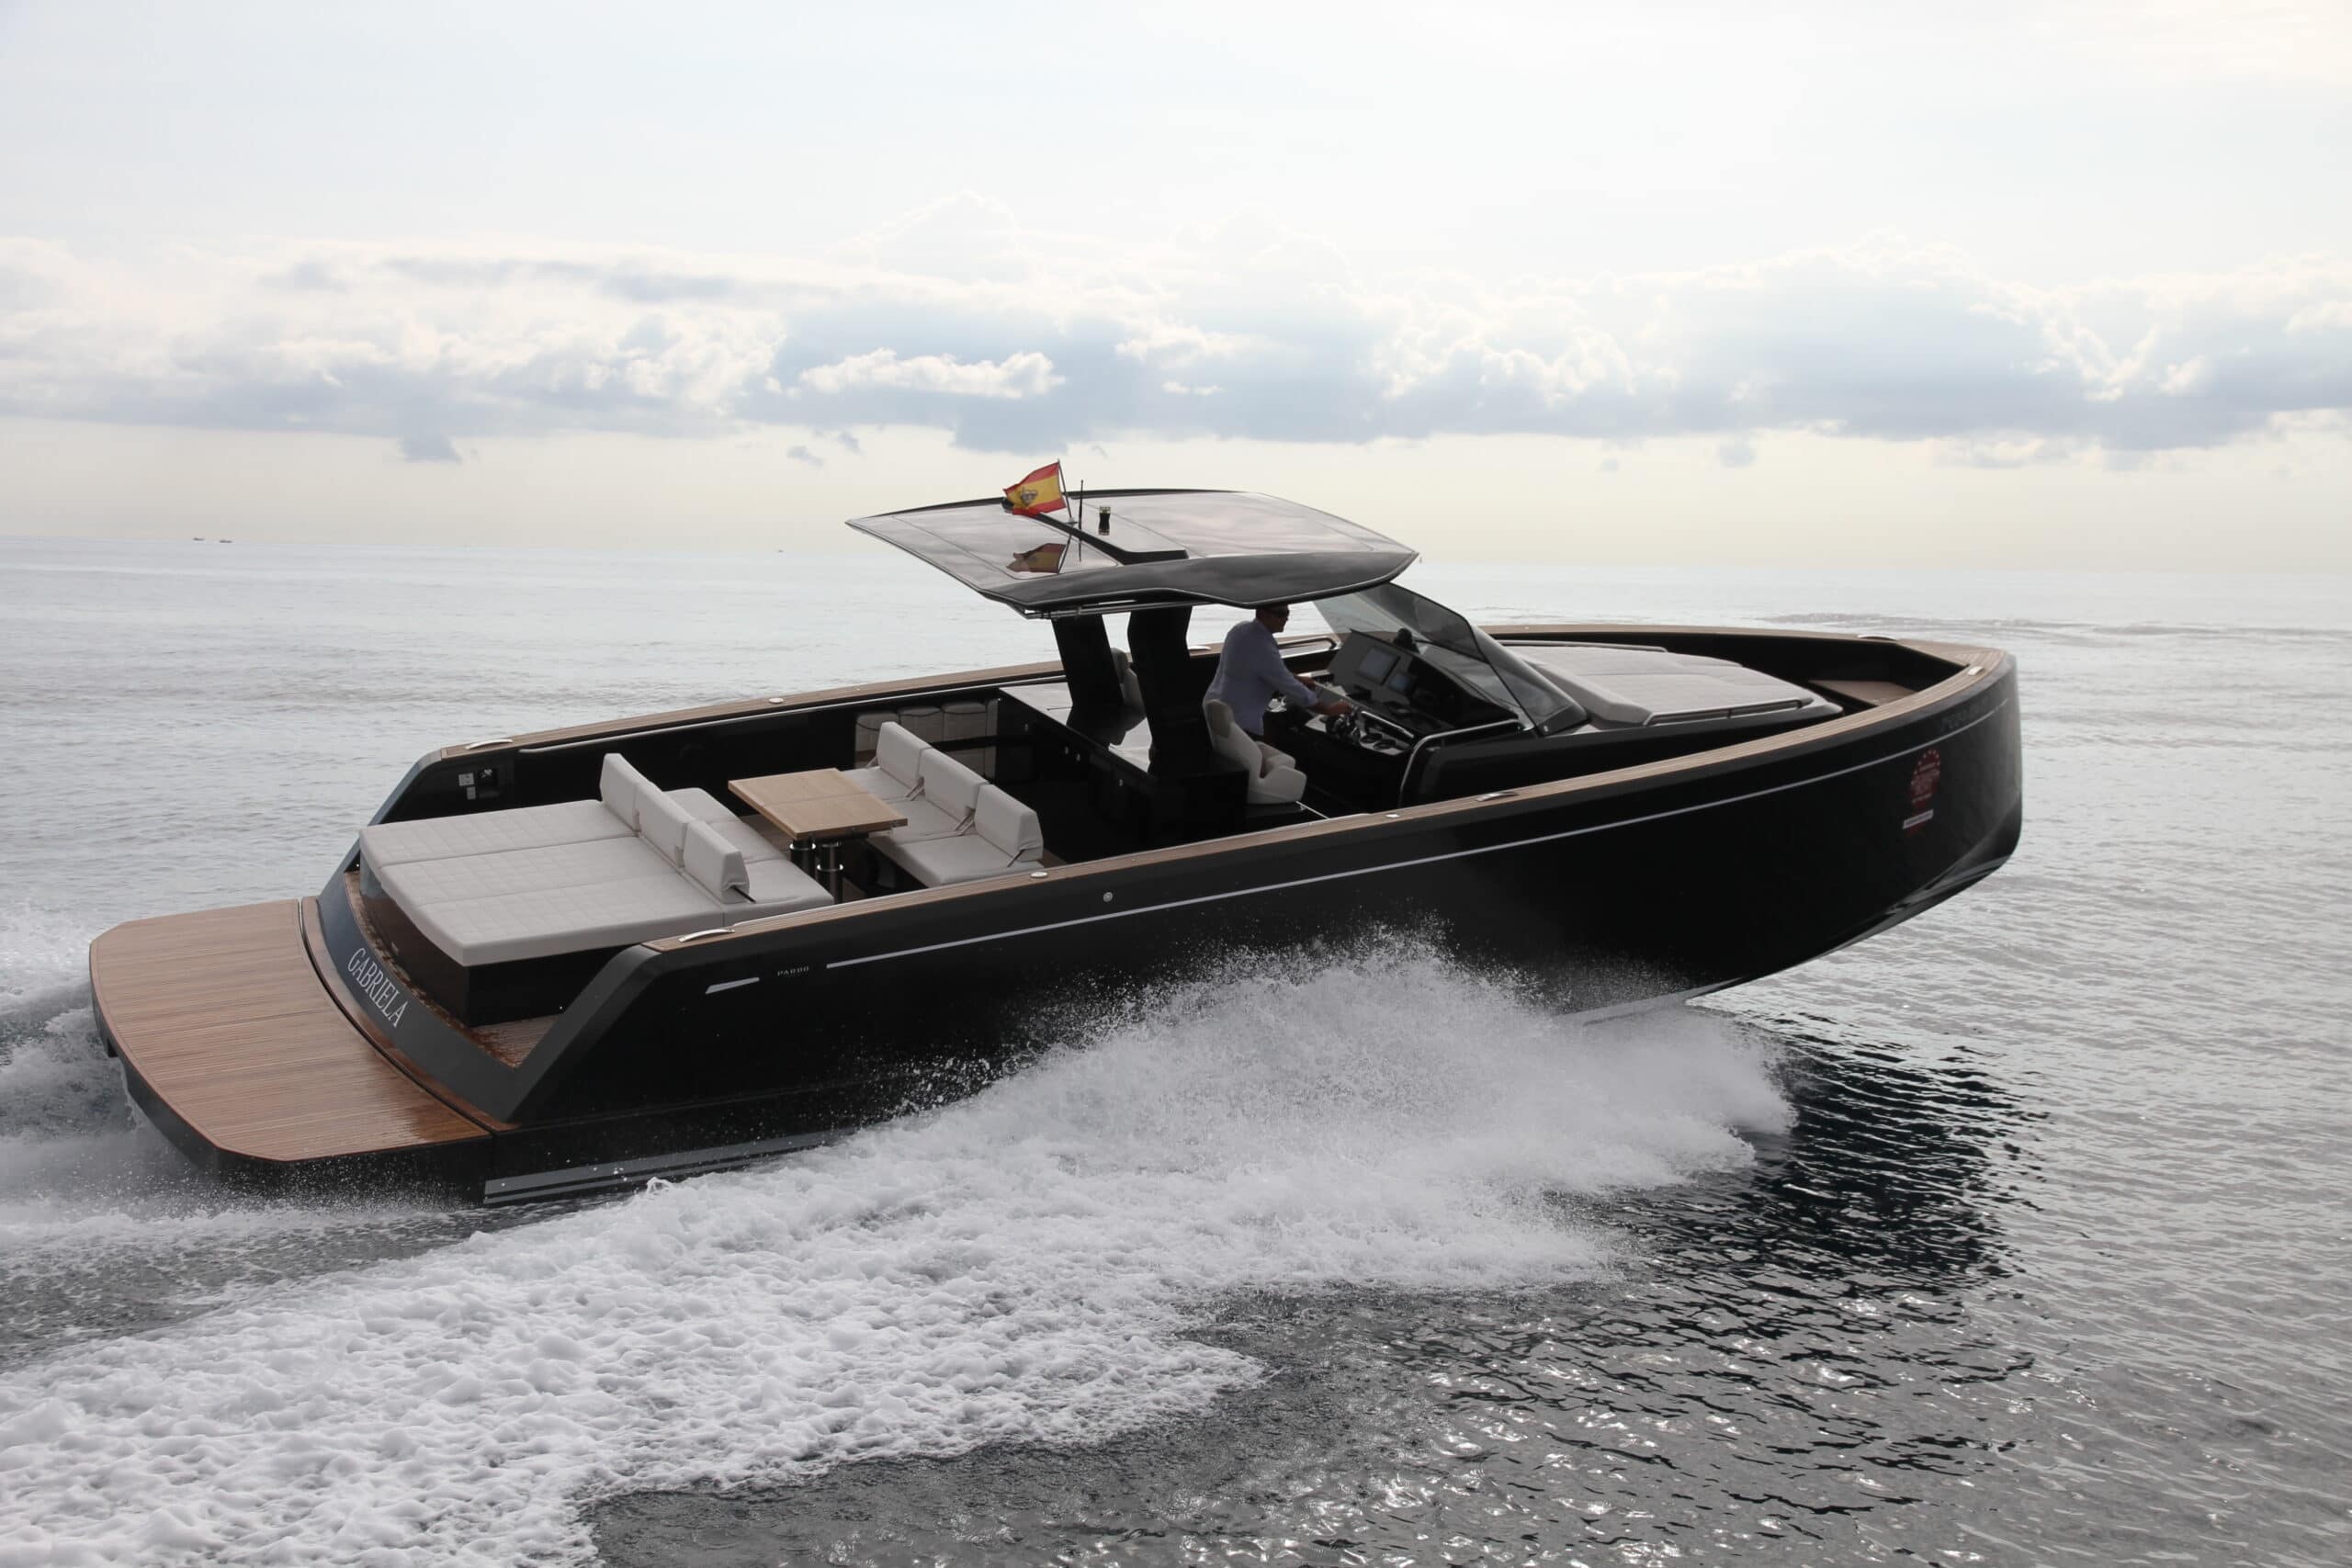 Motorboat: Motorboat Pardo 43, A small, fast powerboat. 2560x1710 HD Wallpaper.